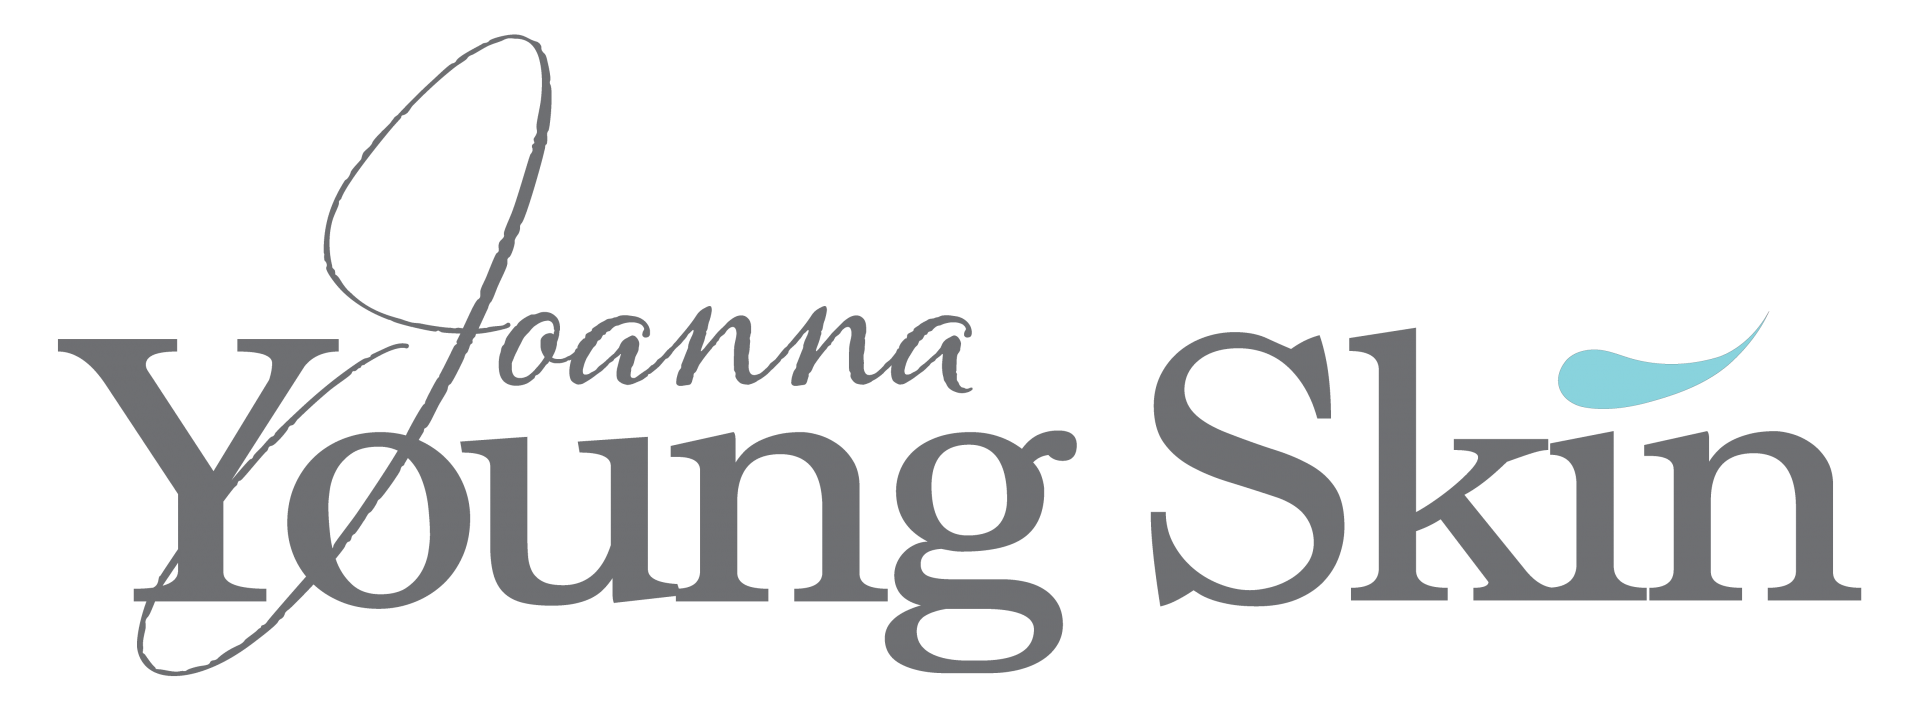 Joanna Young logo